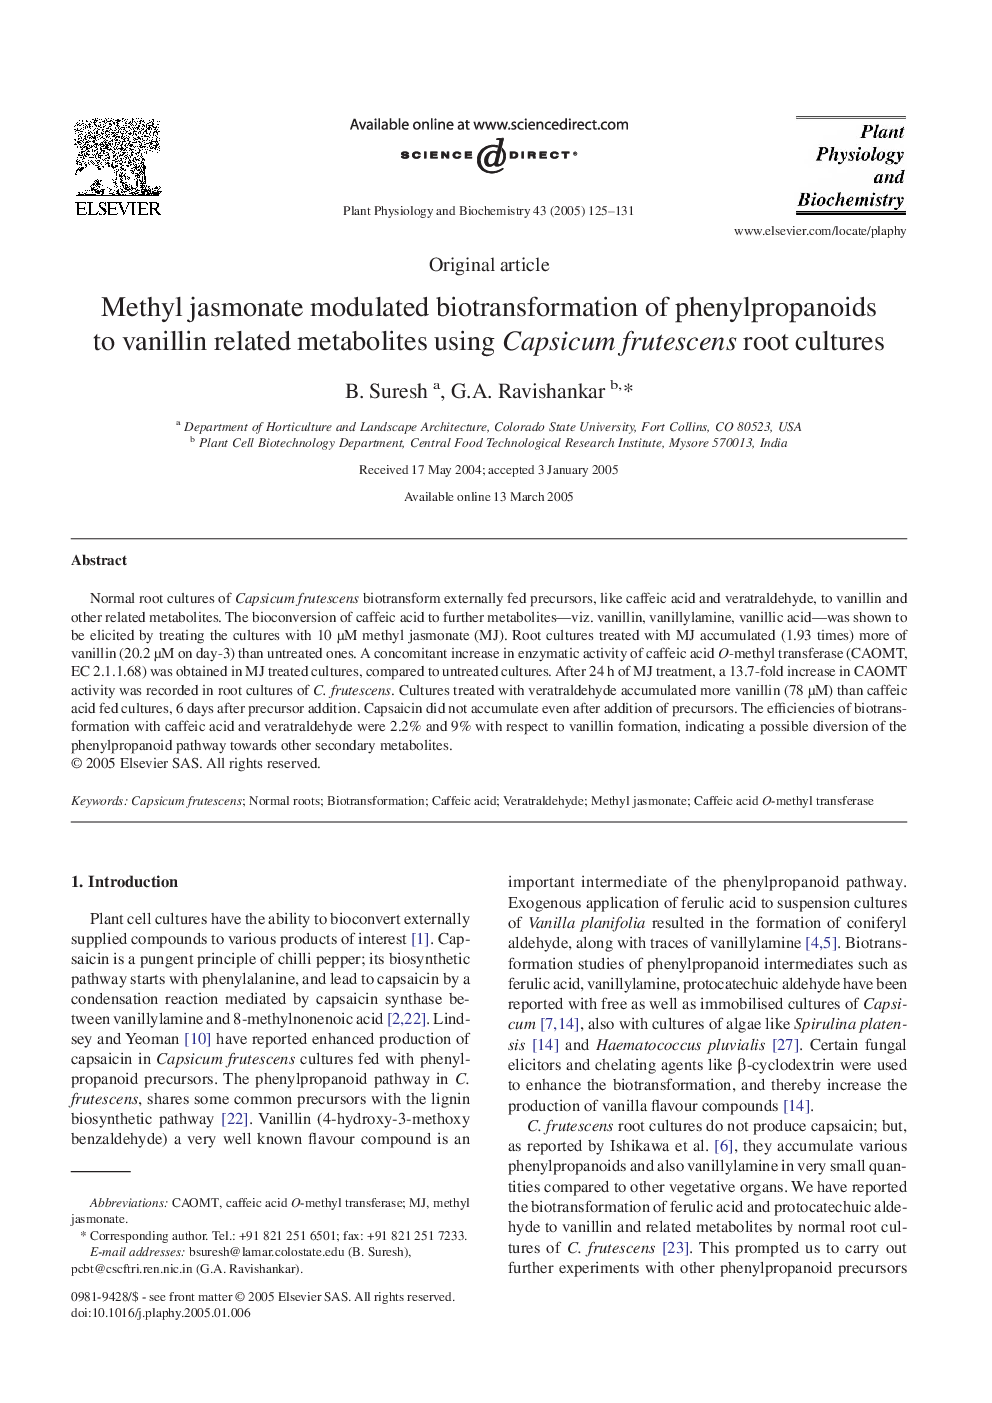 Methyl jasmonate modulated biotransformation of phenylpropanoids to vanillin related metabolites using Capsicum frutescens root cultures